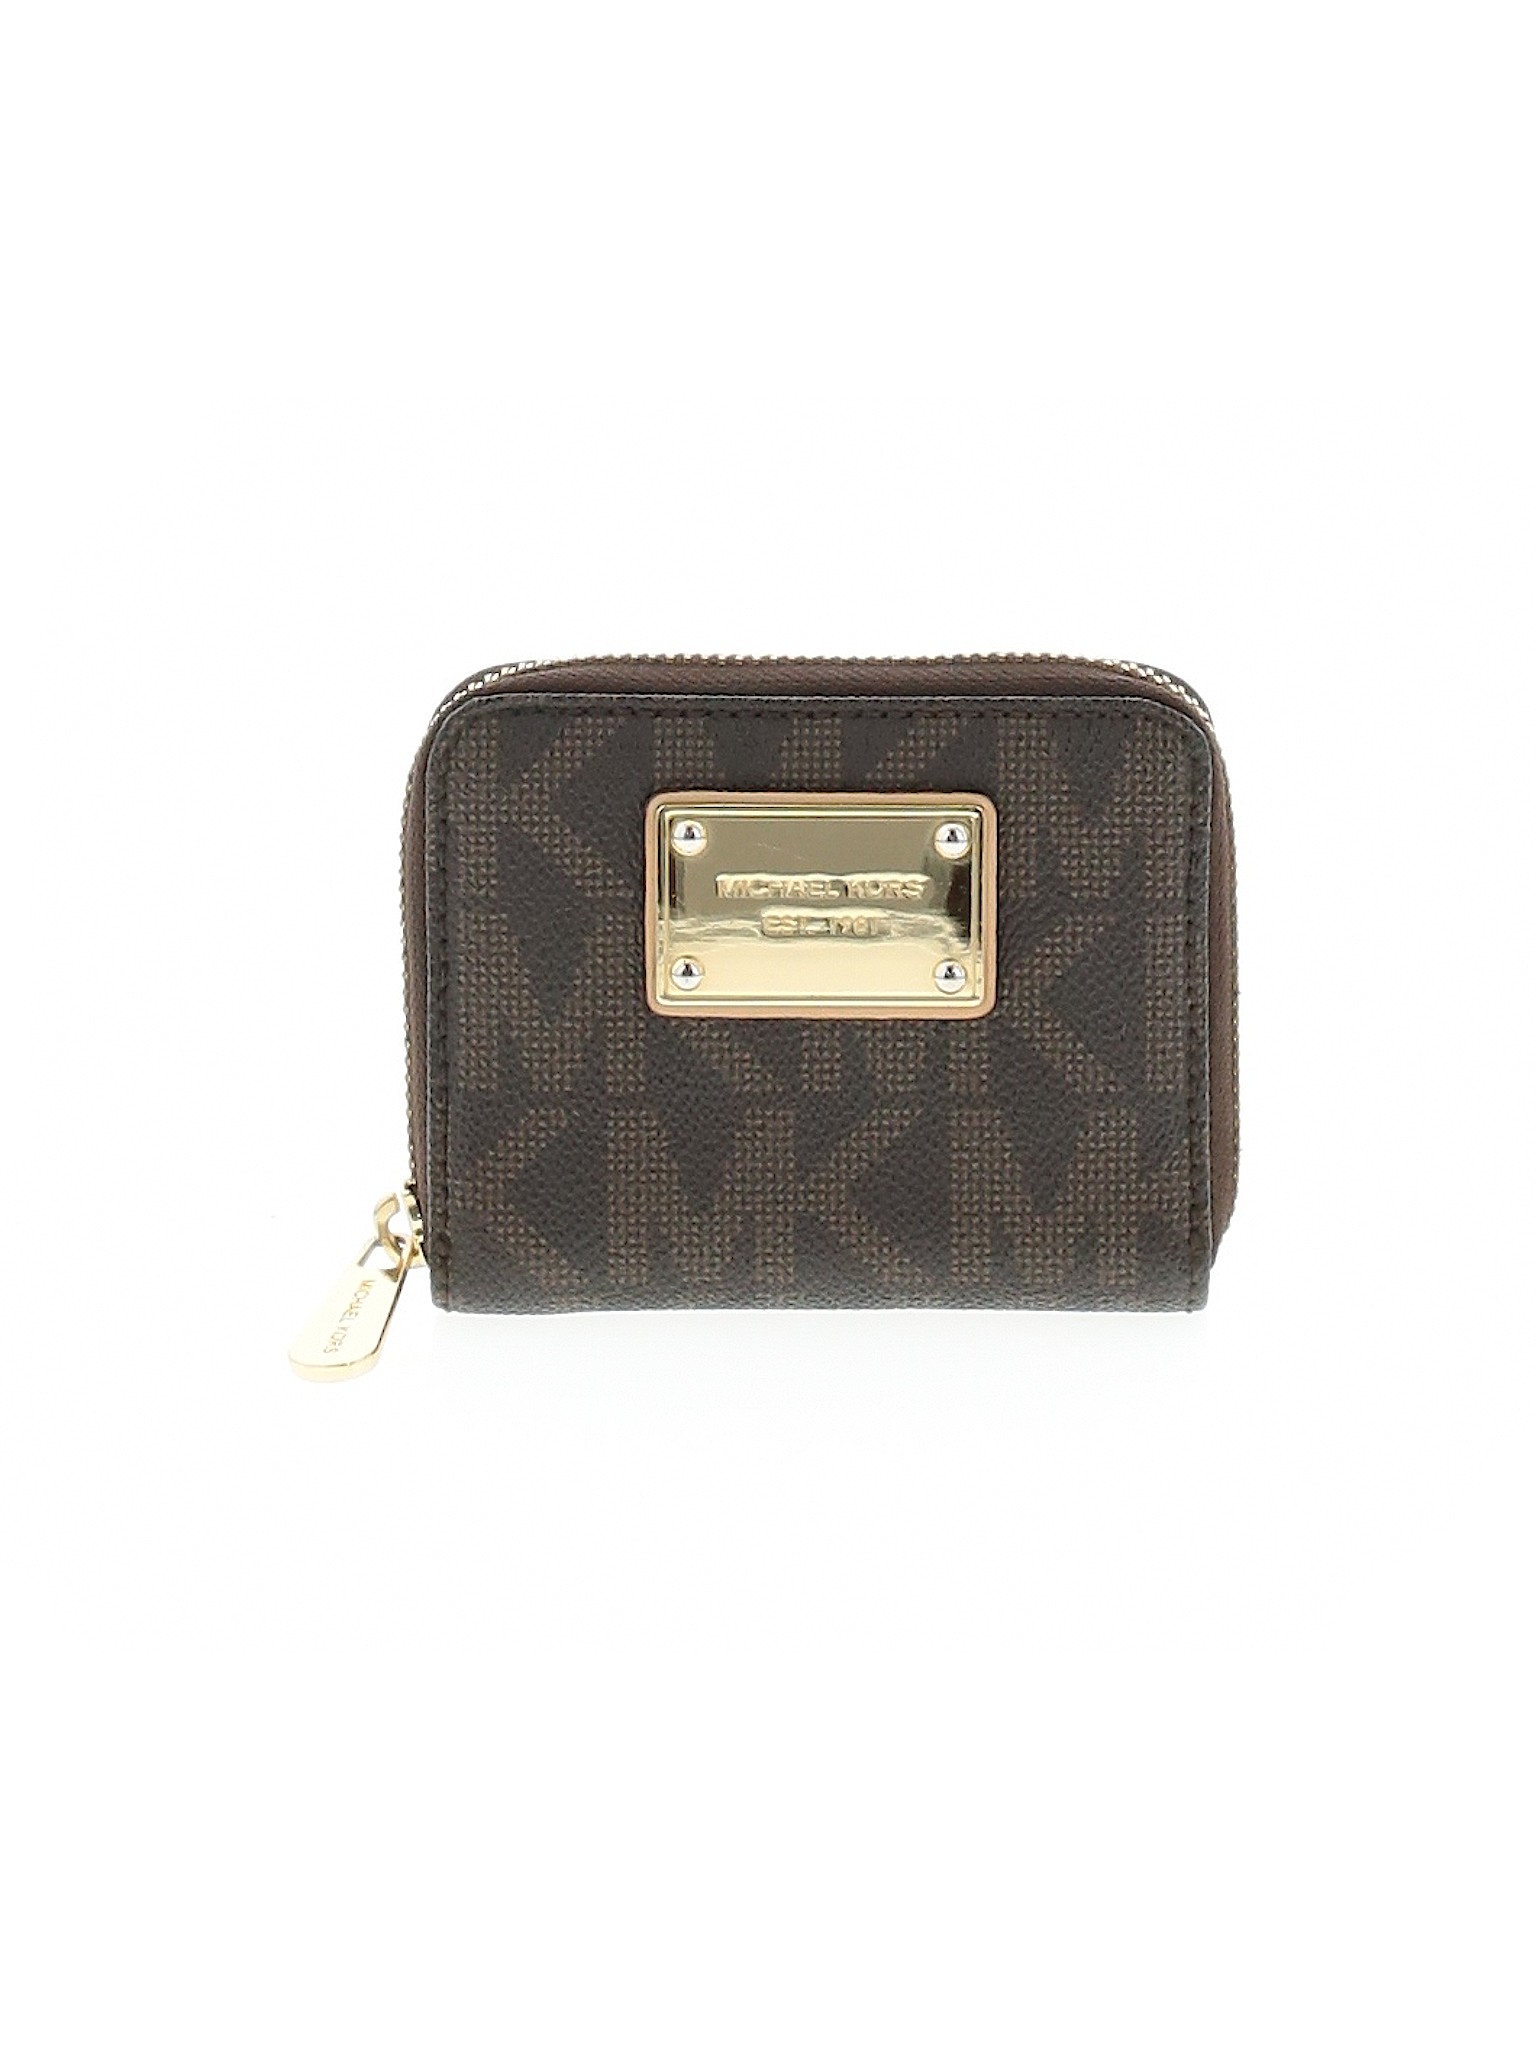 MICHAEL Michael Kors Women Brown Leather Wallet One Size | eBay